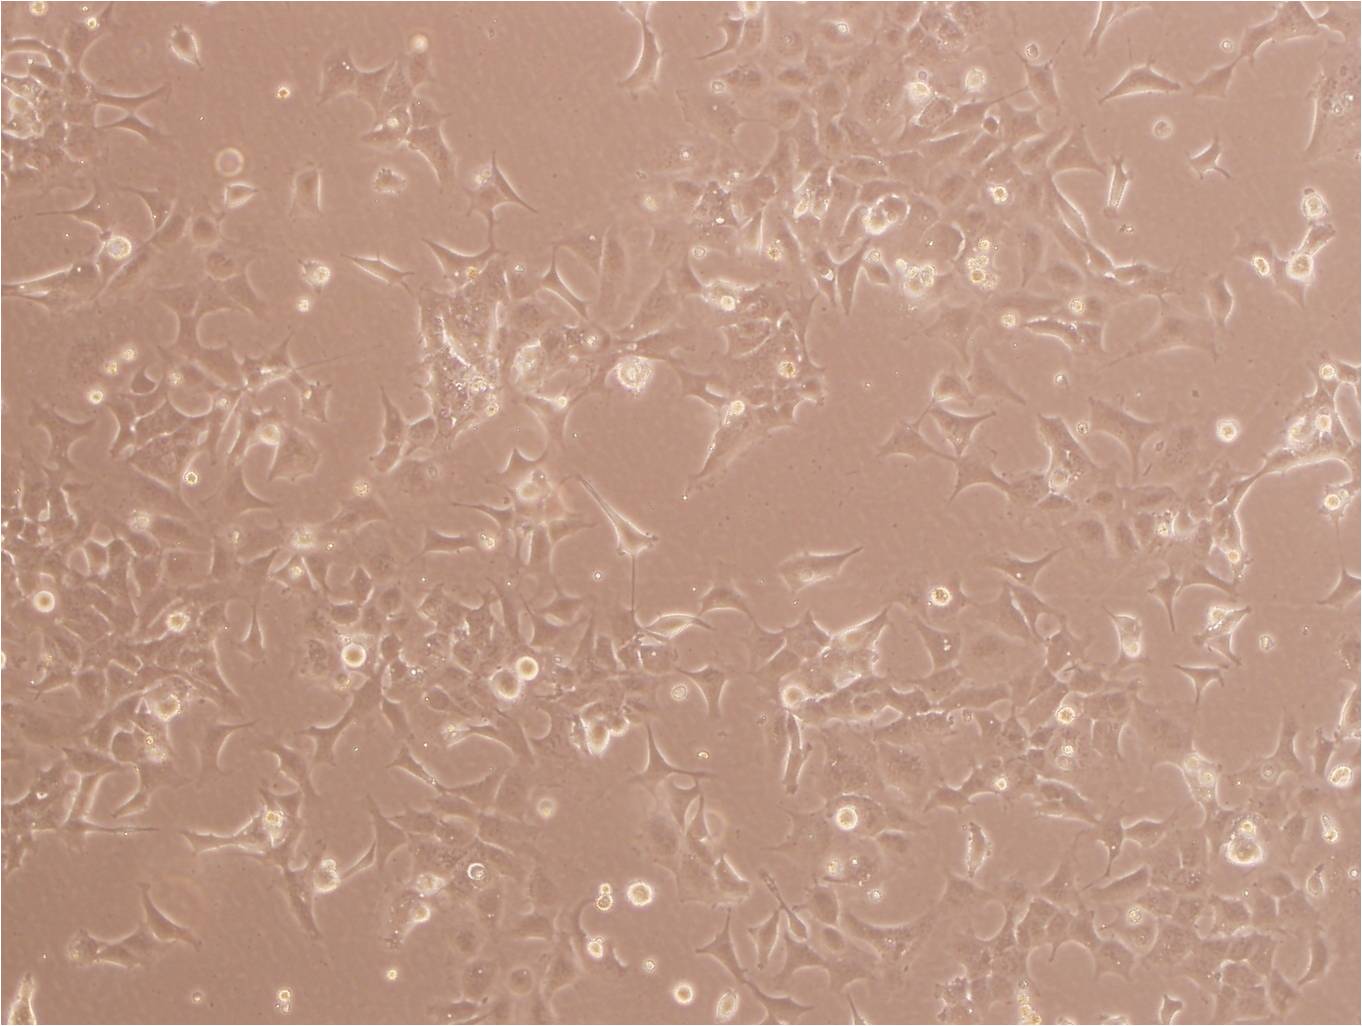 NCI-H820 Cell:人乳头状肺腺癌细胞系,NCI-H820 Cell